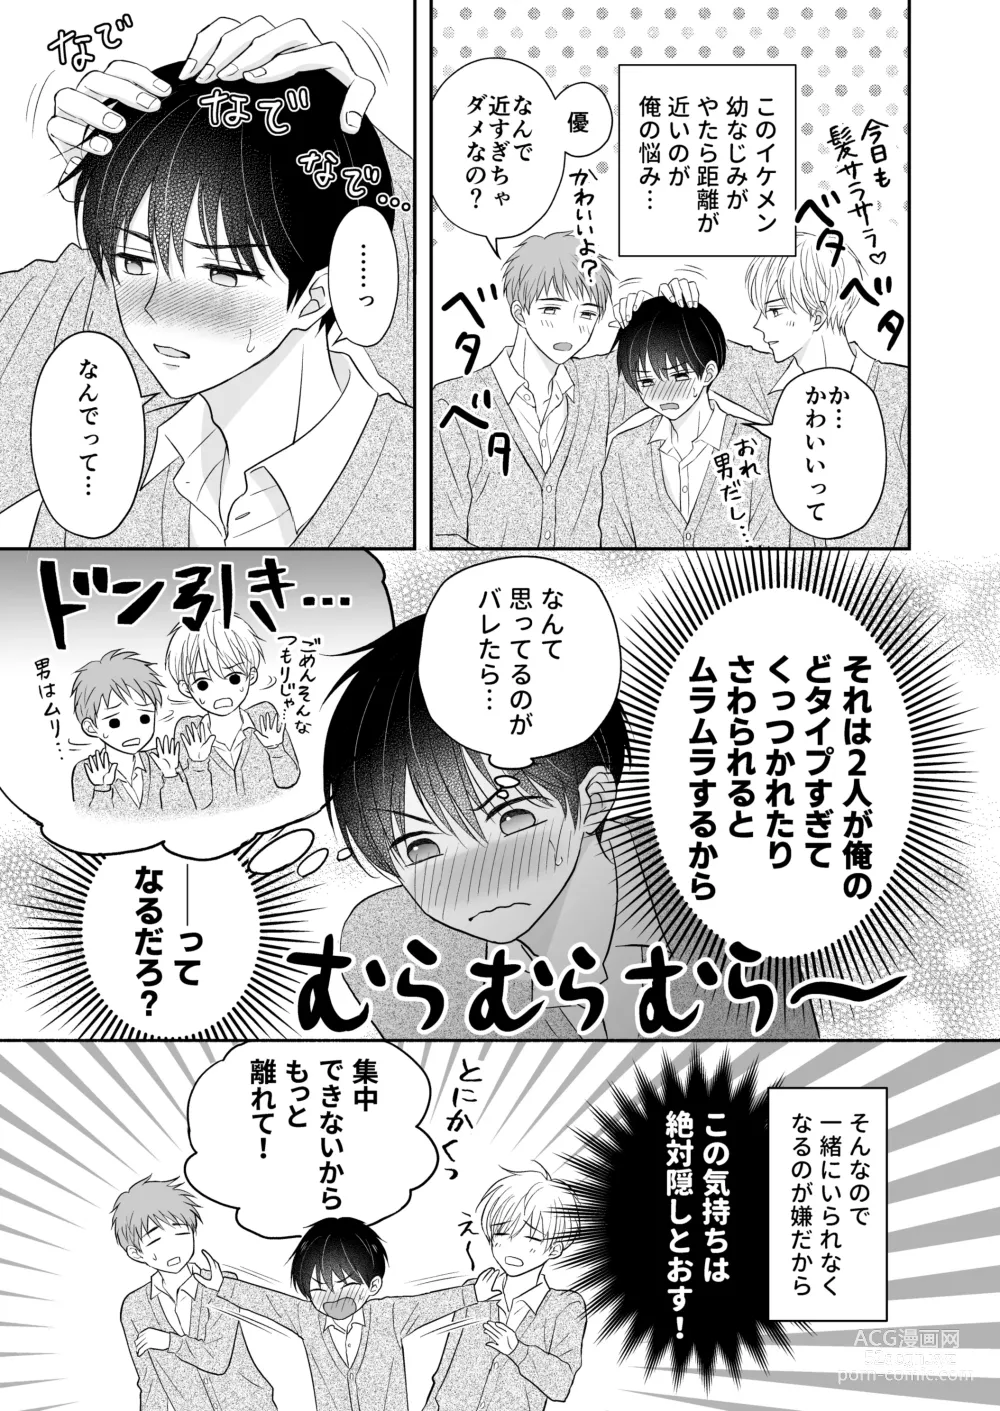 Page 4 of doujinshi 3-nin wa Nakayoshi